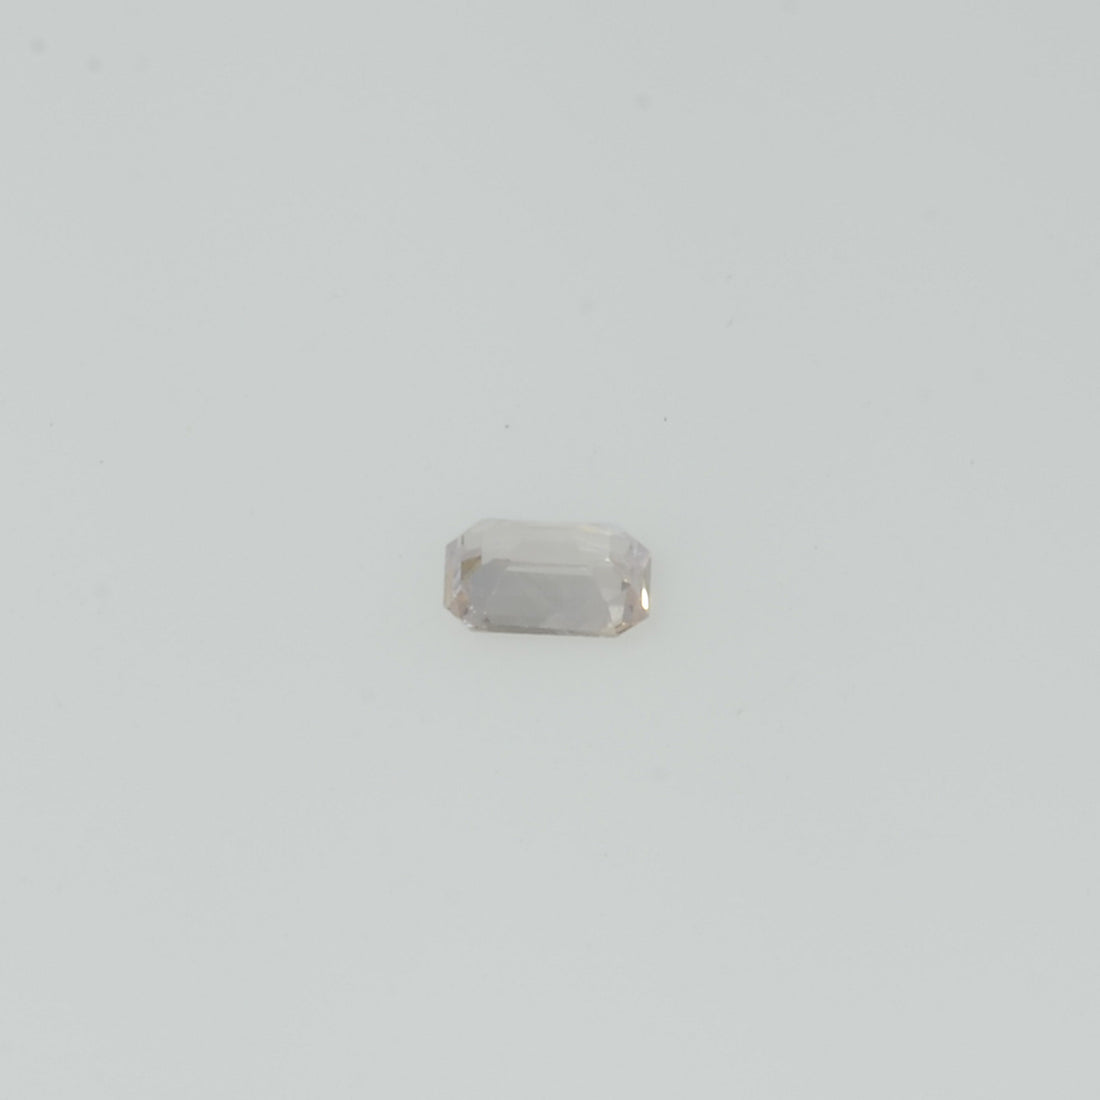 0.16 cts Natural Baby Pink Sapphire Loose Gemstone Octagon Cut - Thai Gems Export Ltd.